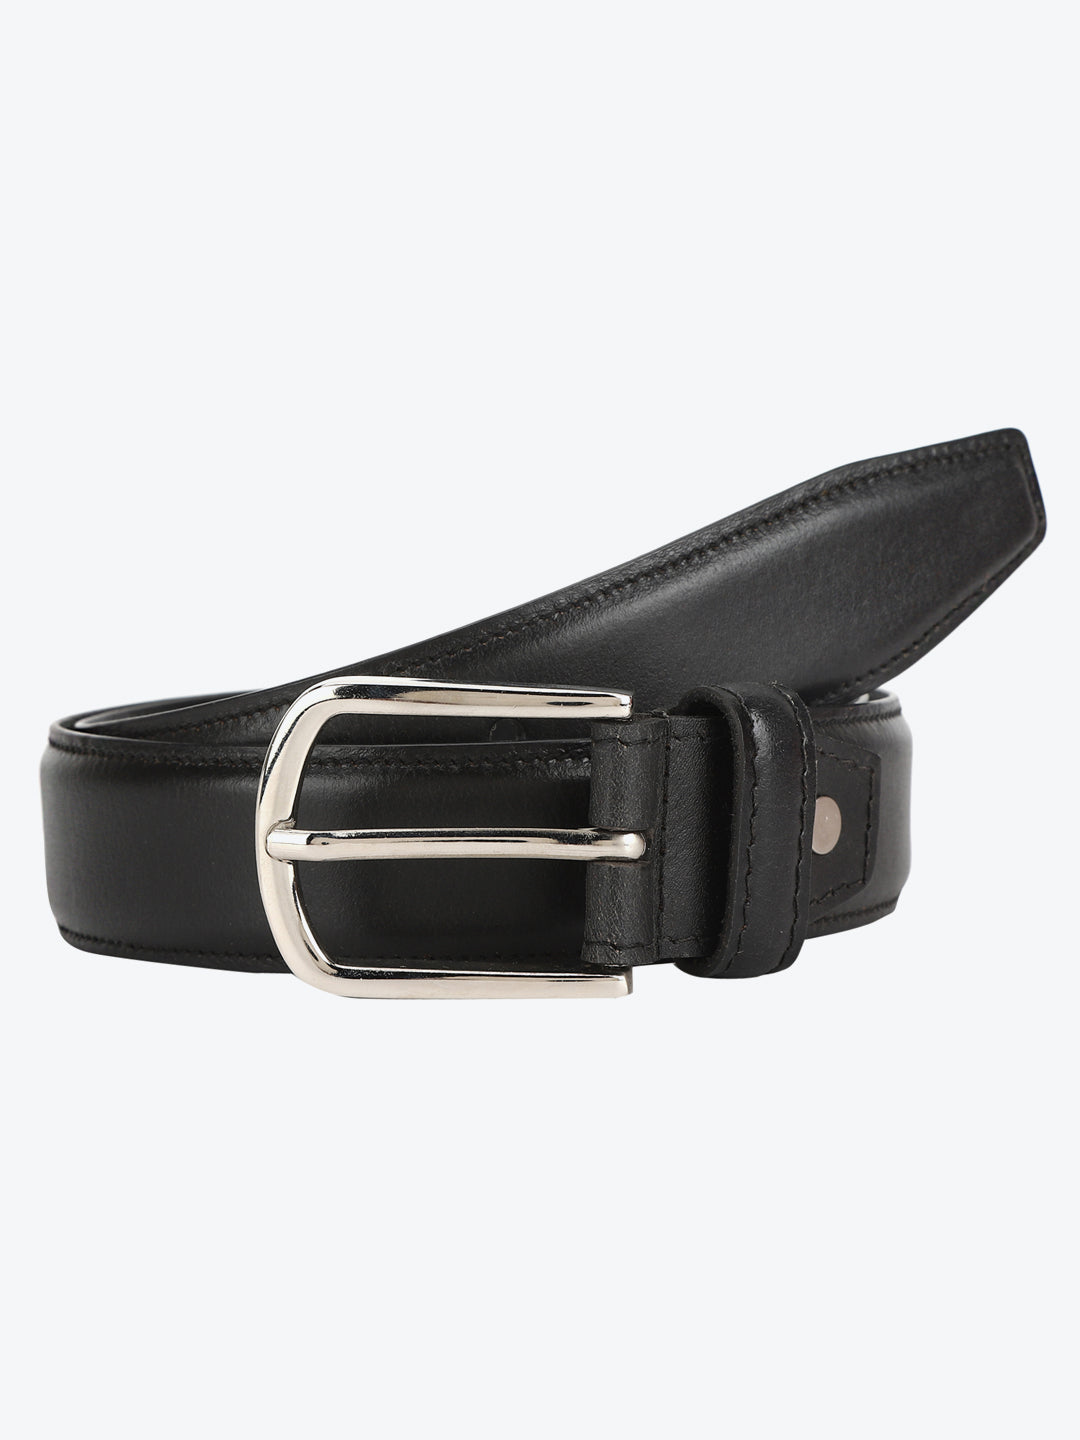 Black profile men's belt Aditi Wasan